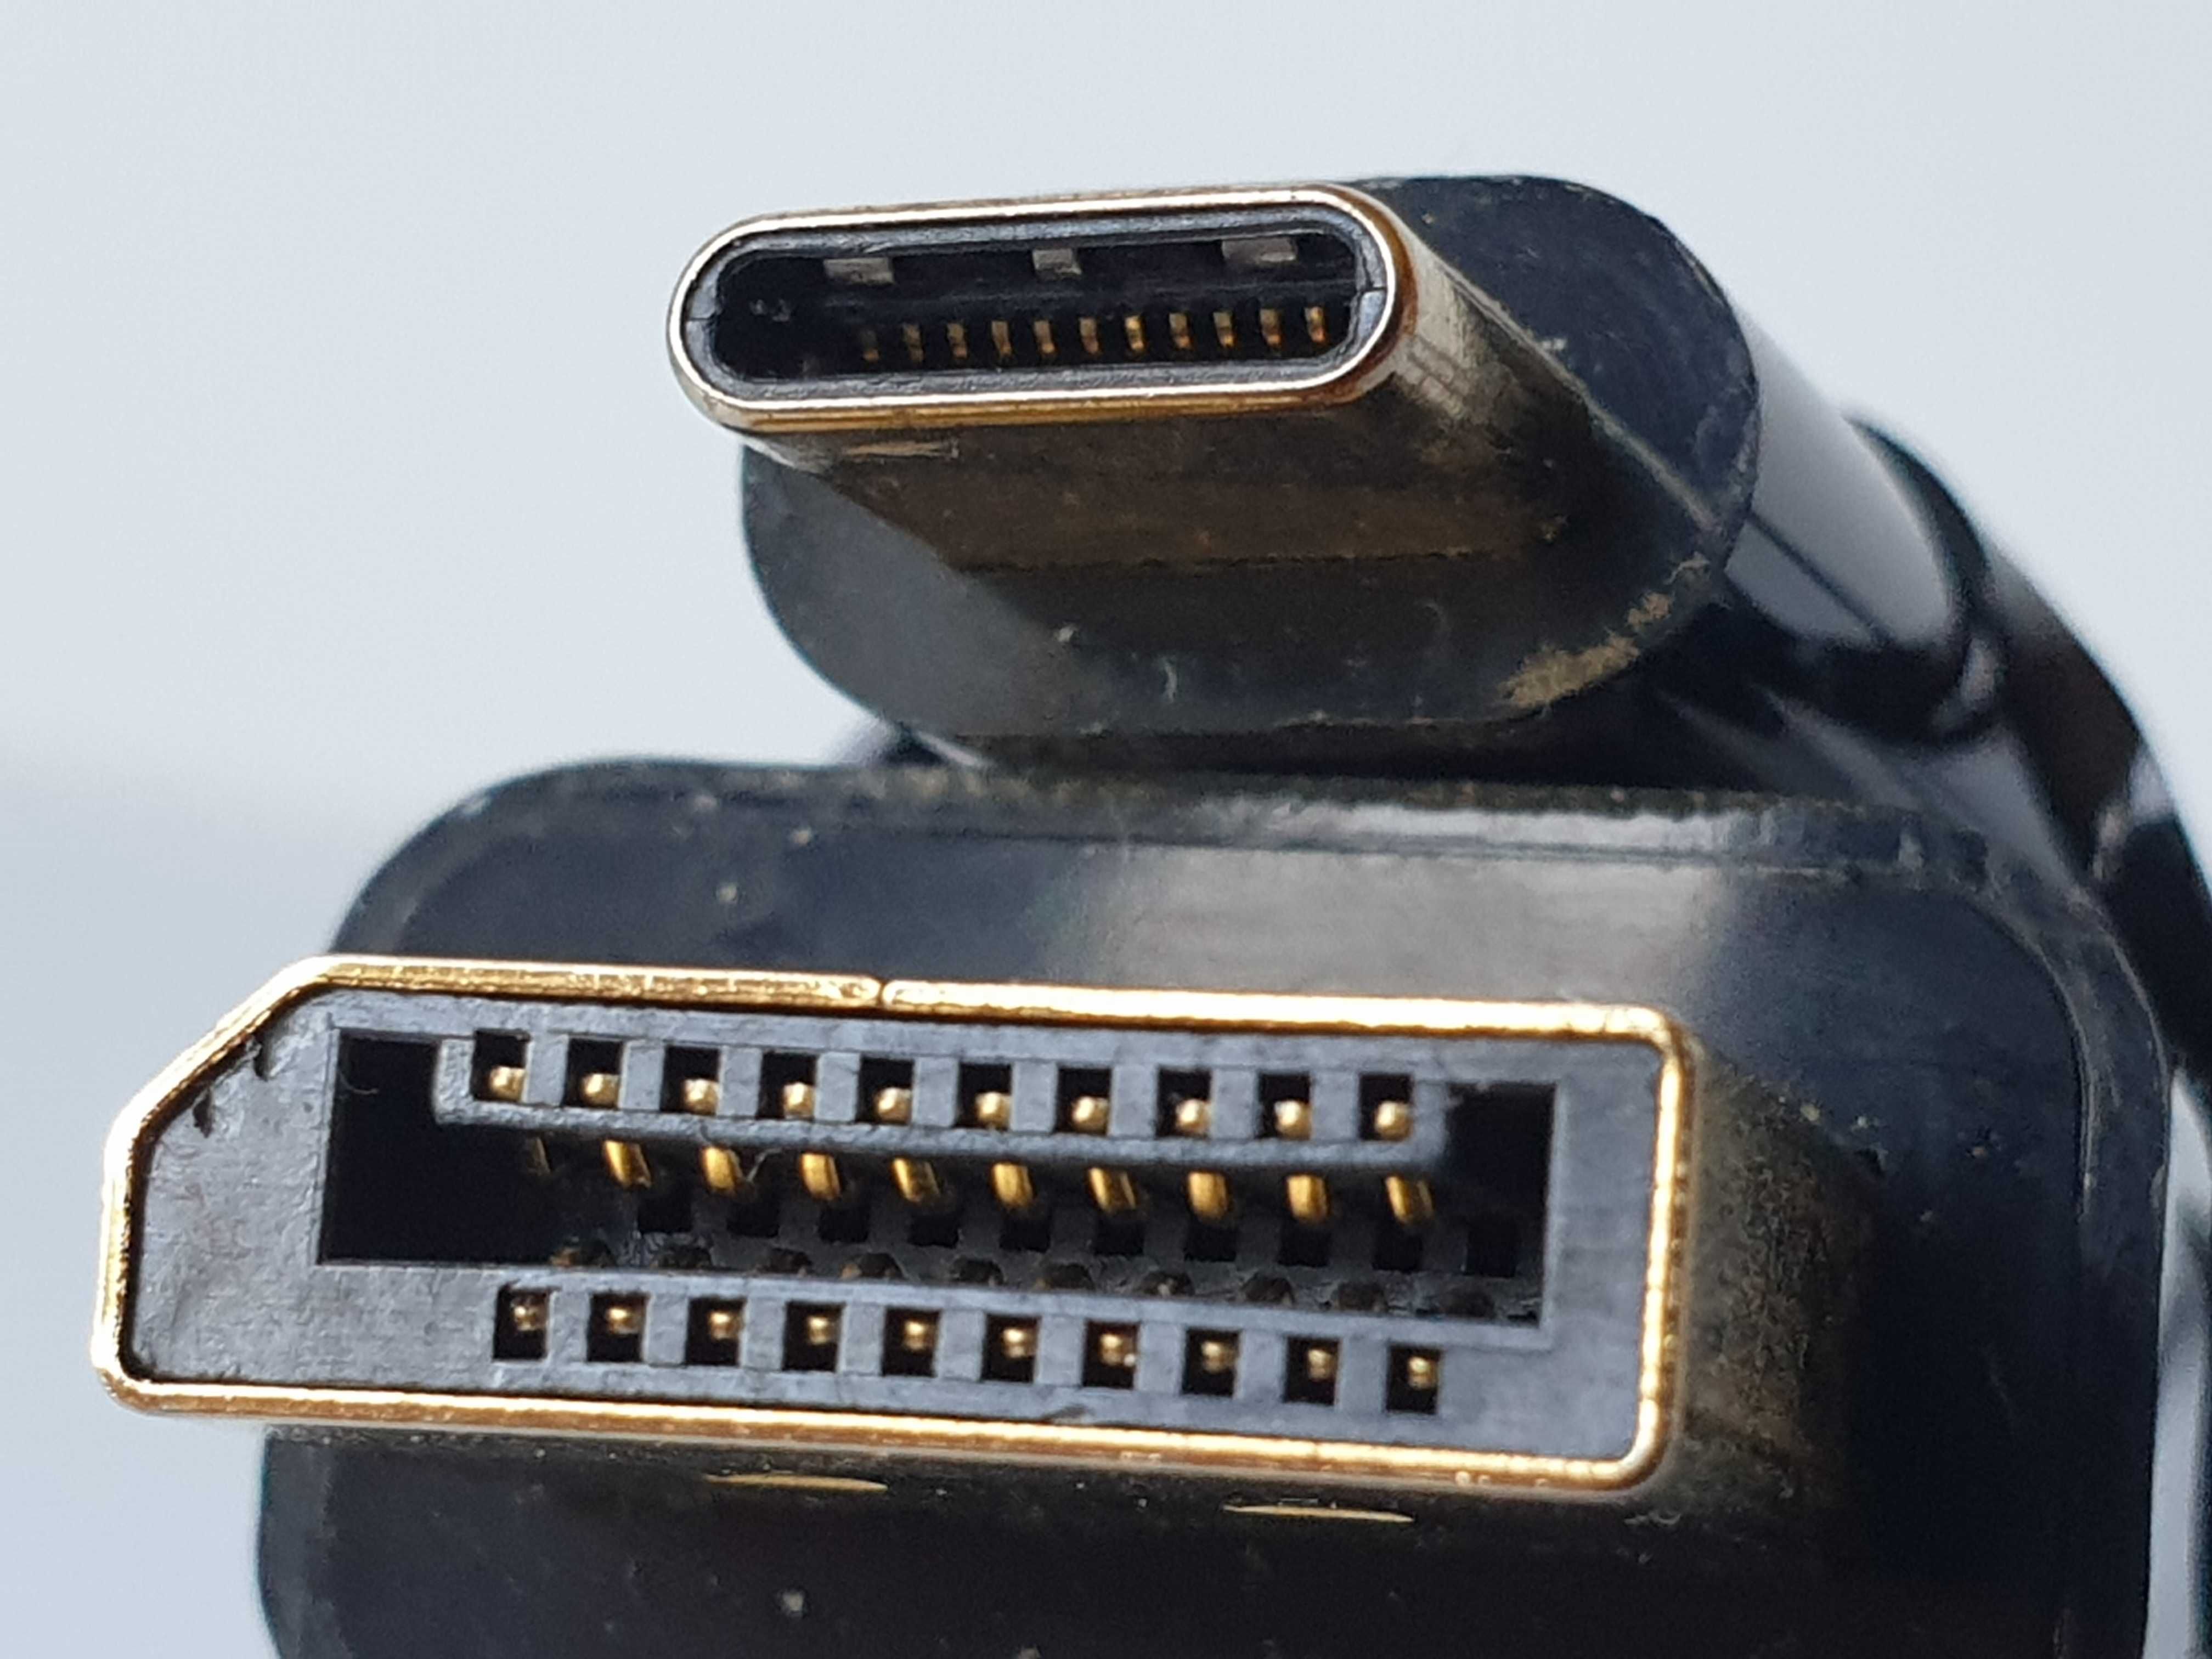 кабель  USB Type-C to DisplayPort Thunderbolt 3